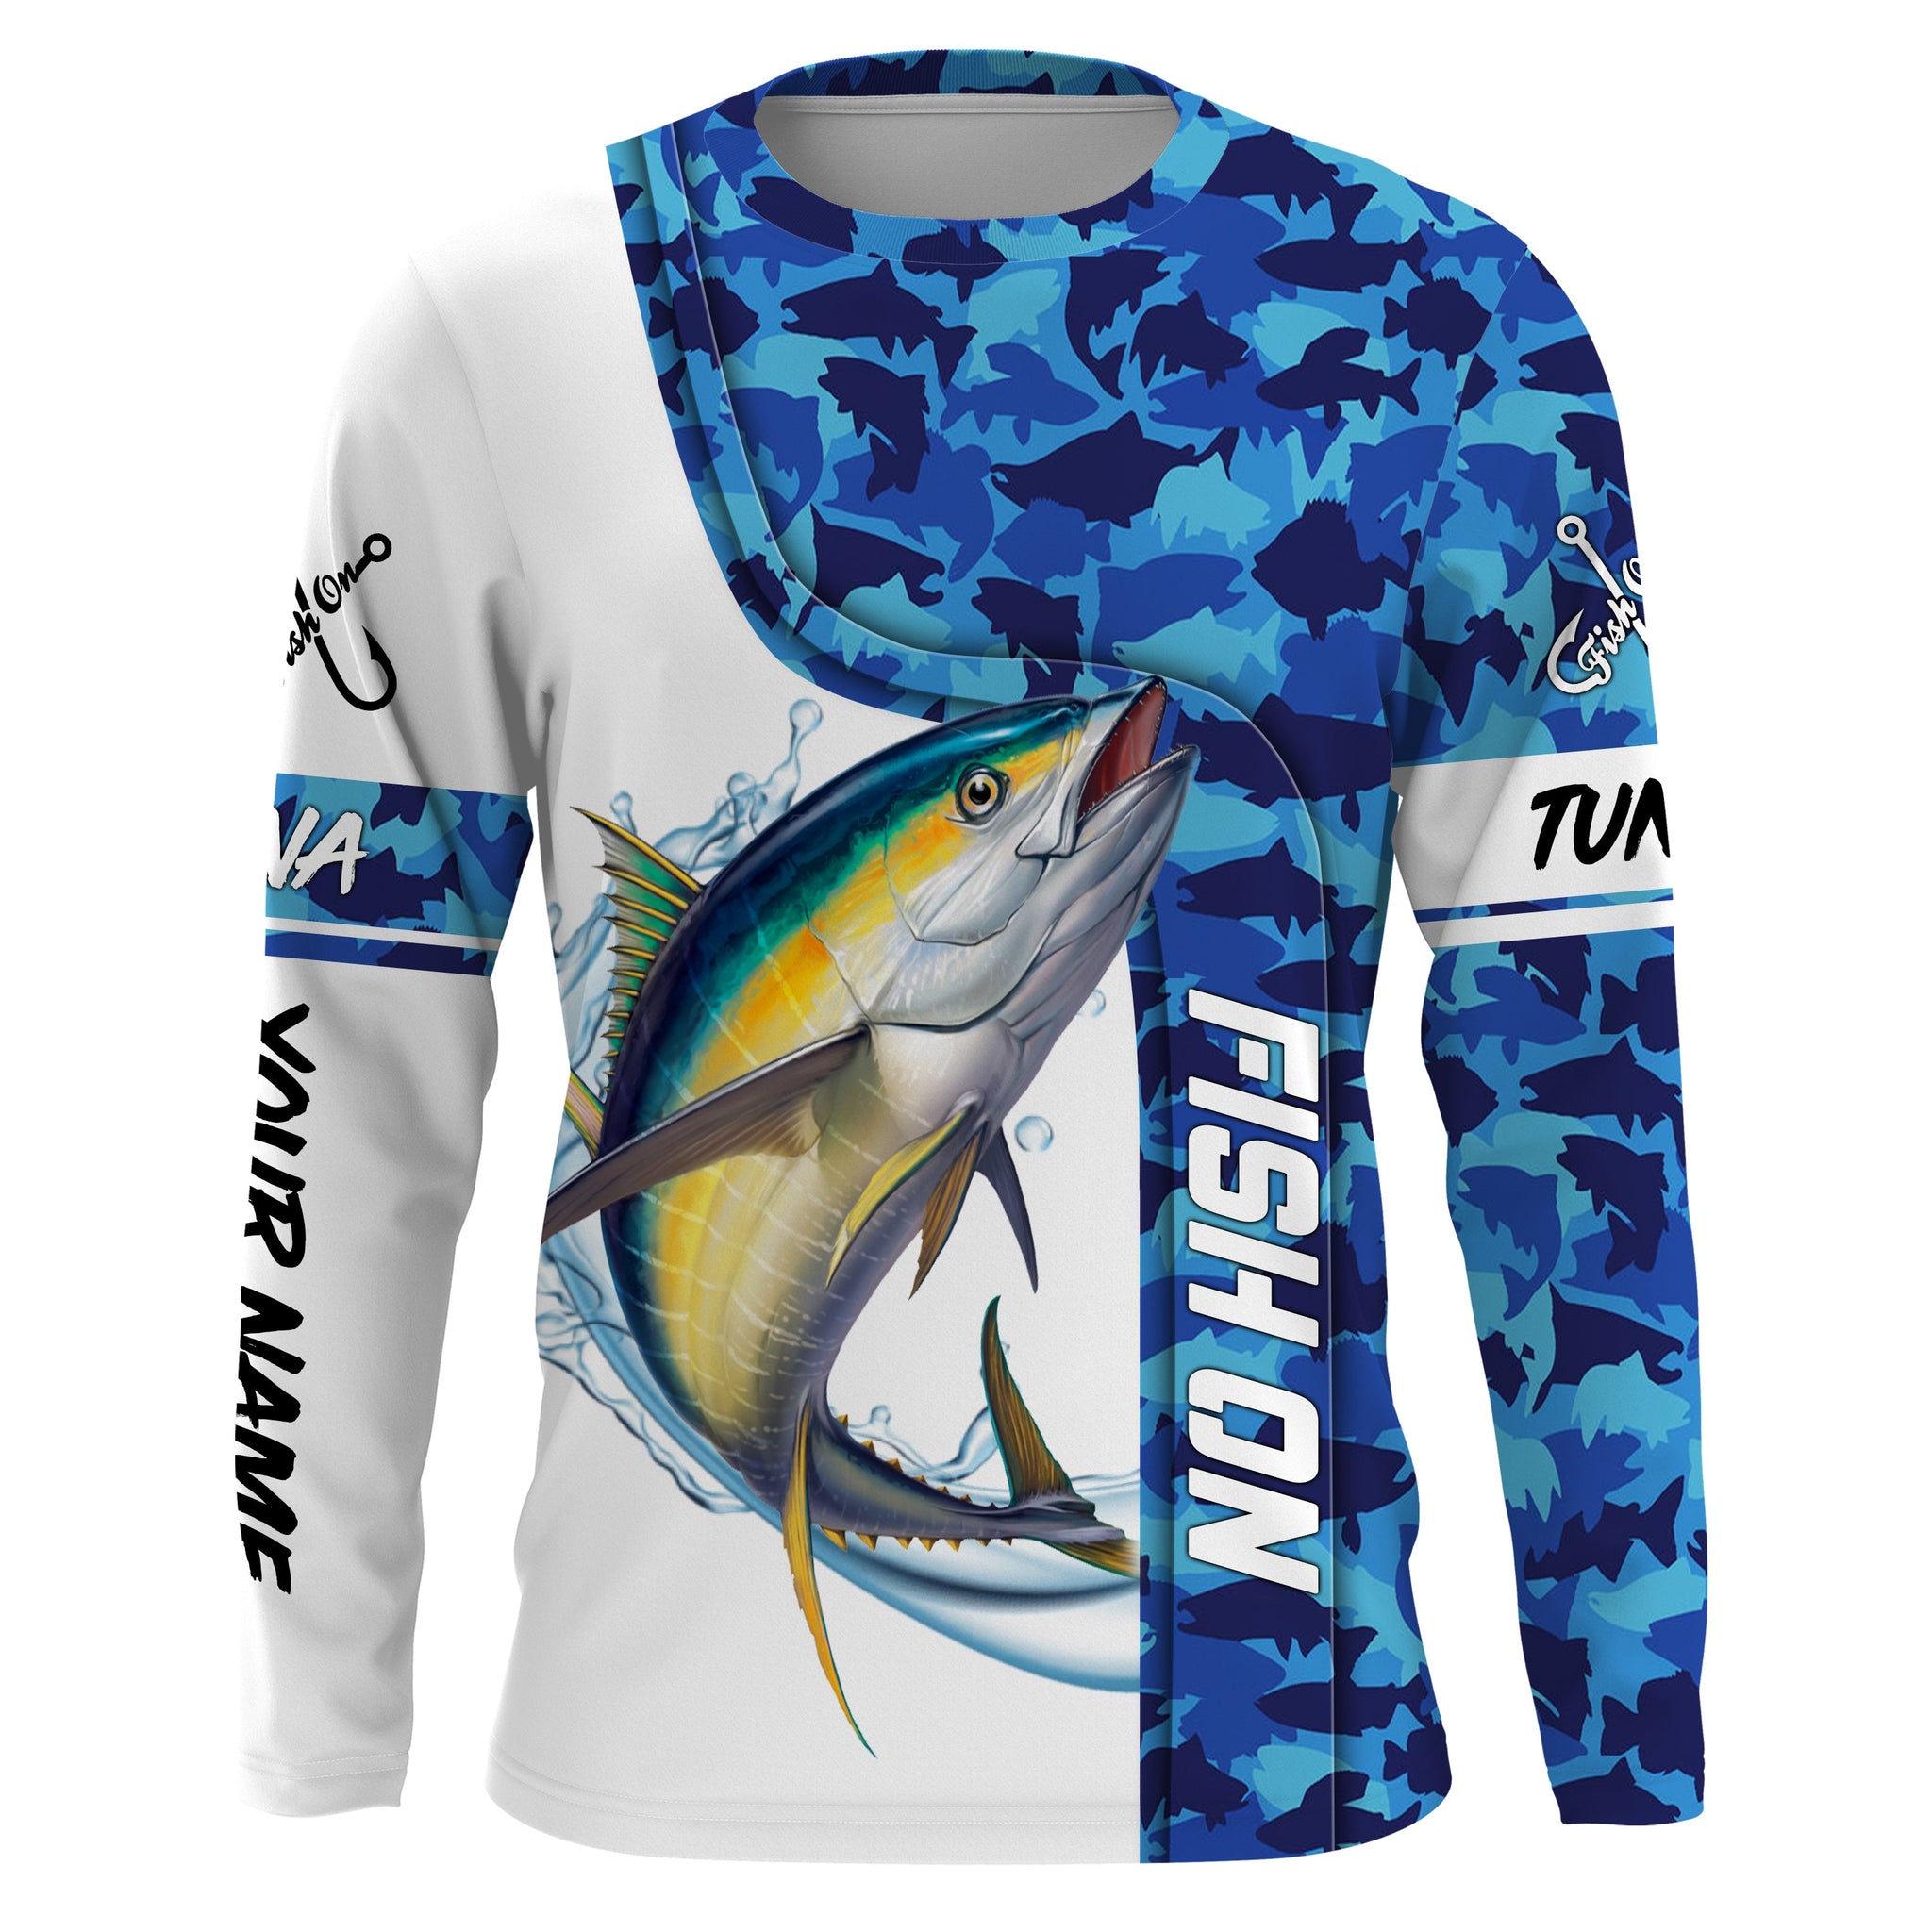 Tarpon Performance Digital Camo 50+uv Fishing Long Sleeve Shirts- Reel Fishy Apparel M / Aqua Blue Camo - unisex